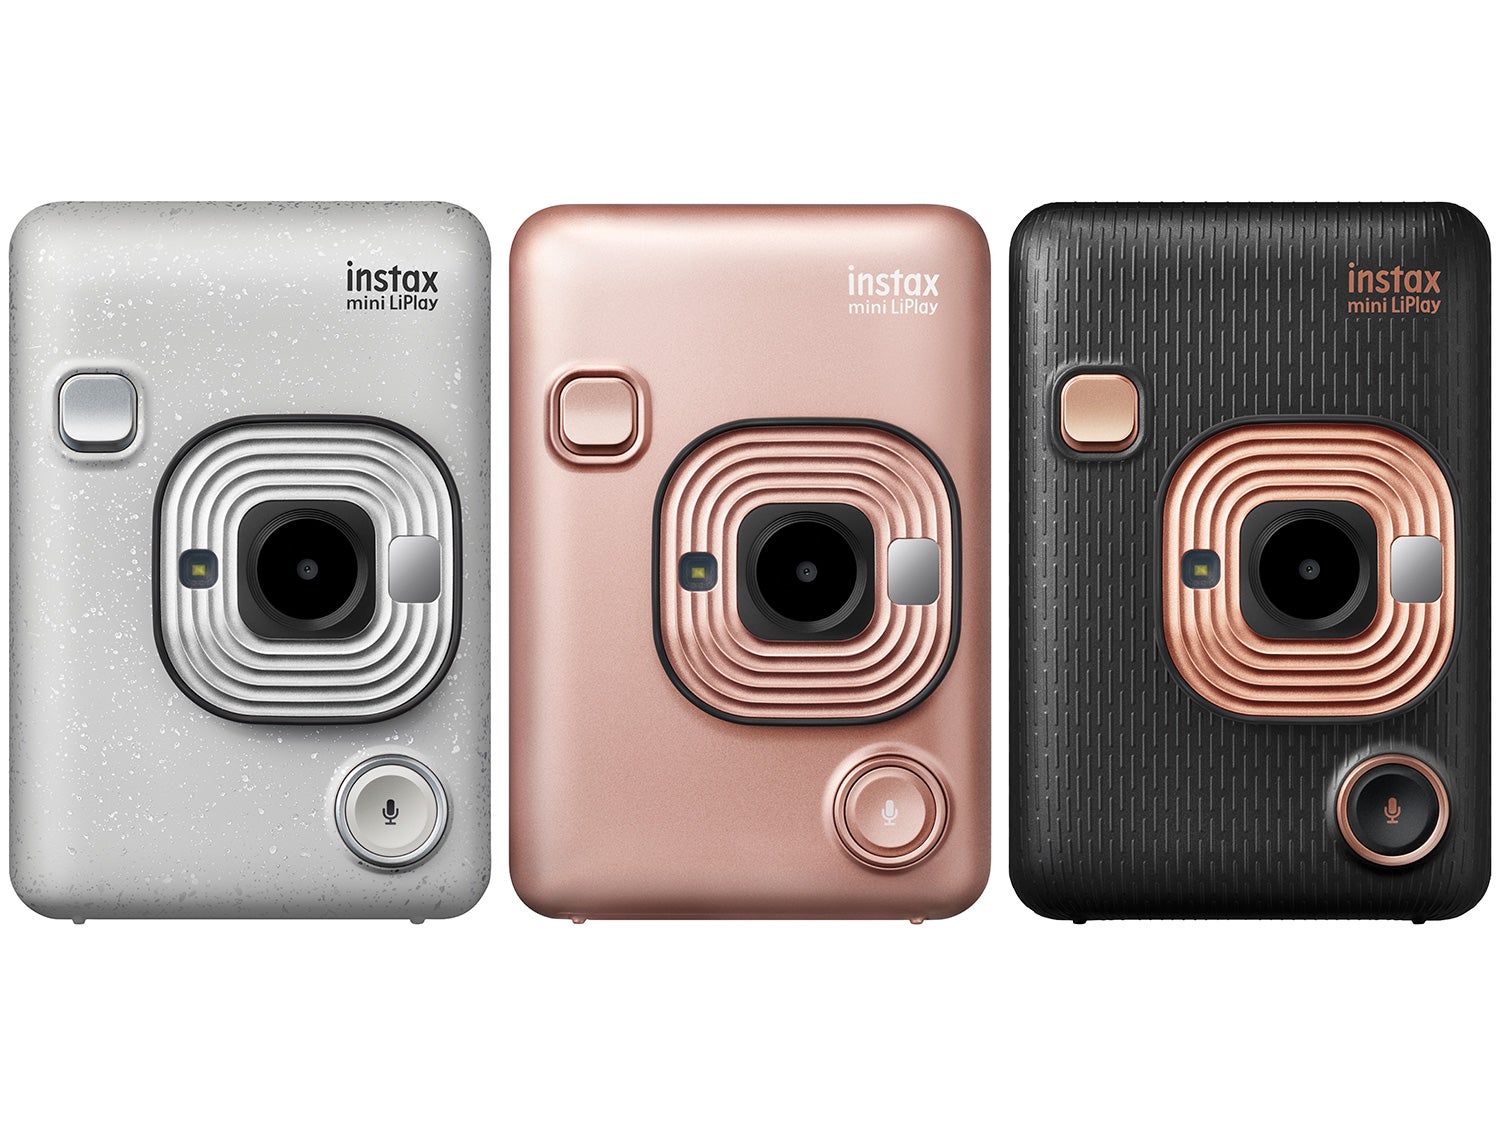 The Fujifilm Instax Mini LiPlay is an instant film camera that records